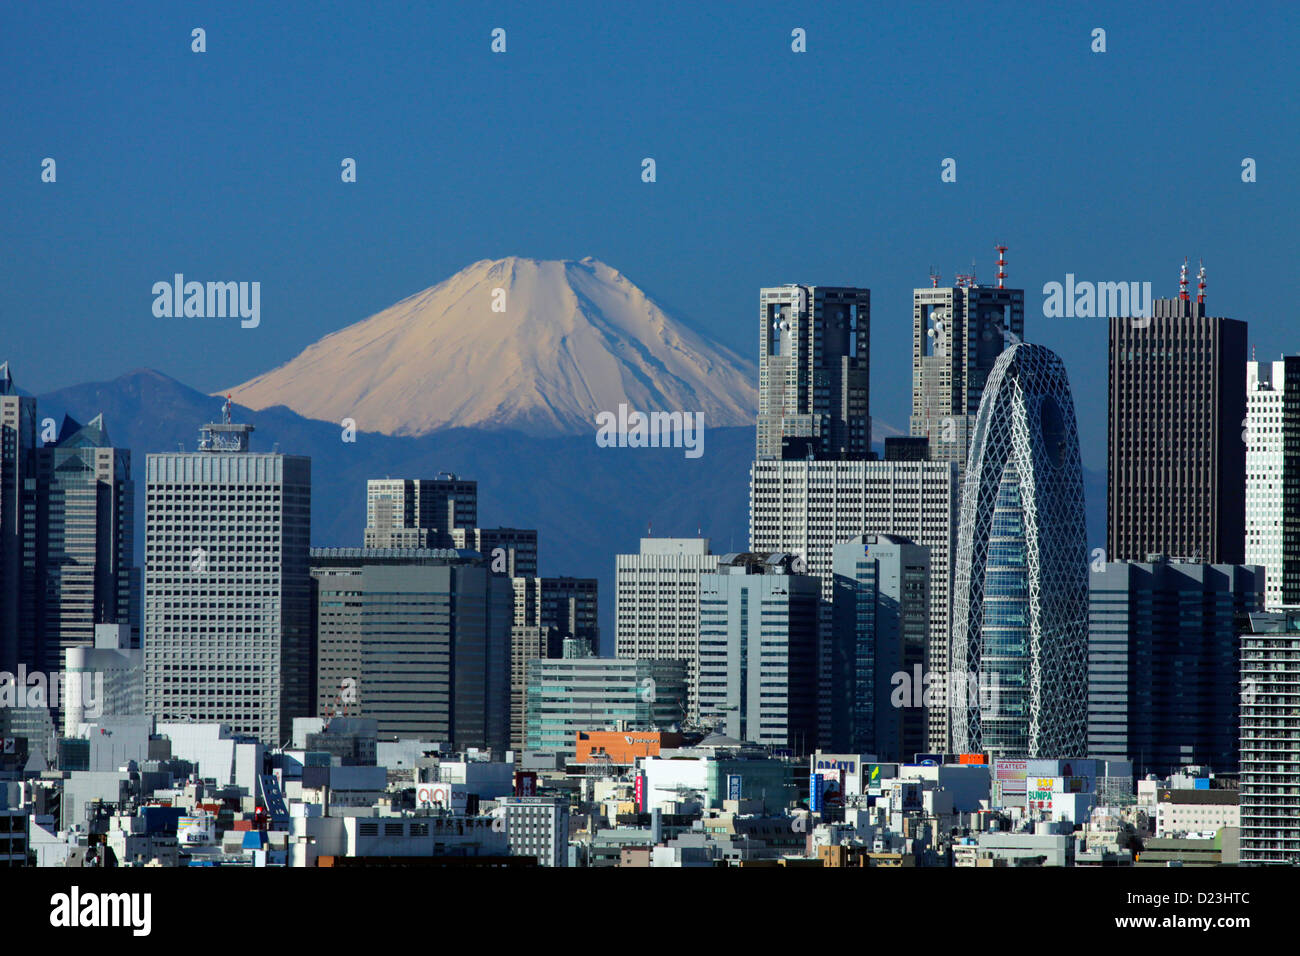 Mount Fuji and skyscrapers in Shinjuku Tokyo Japan Stock Photo